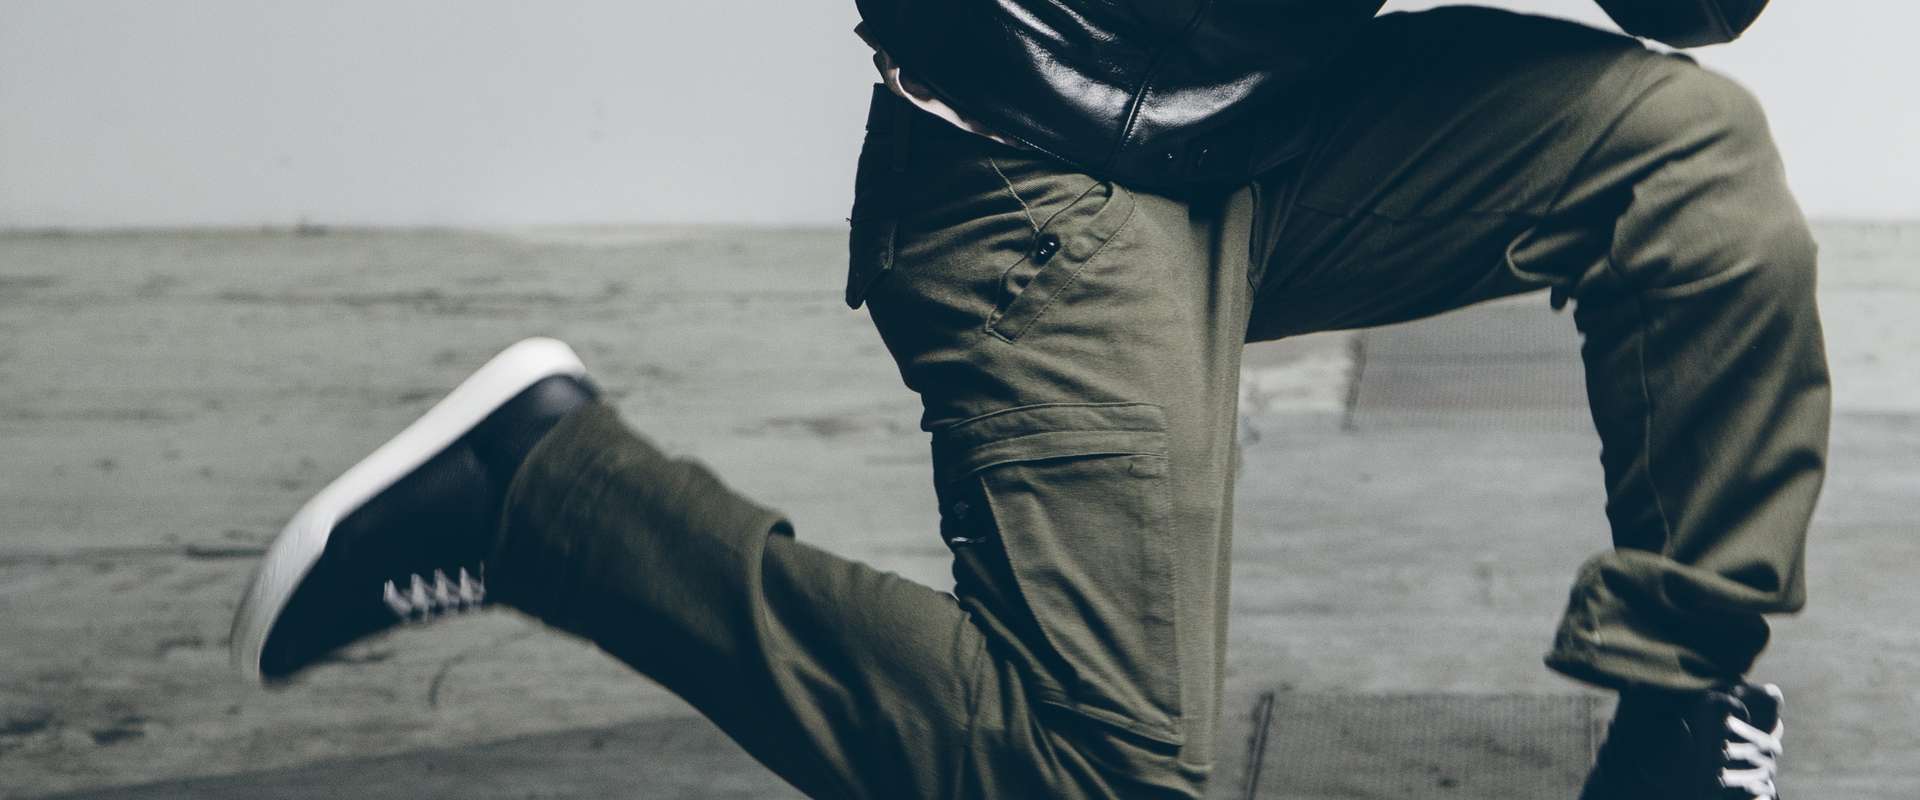 Protective biker pants designed for everyday challenges.